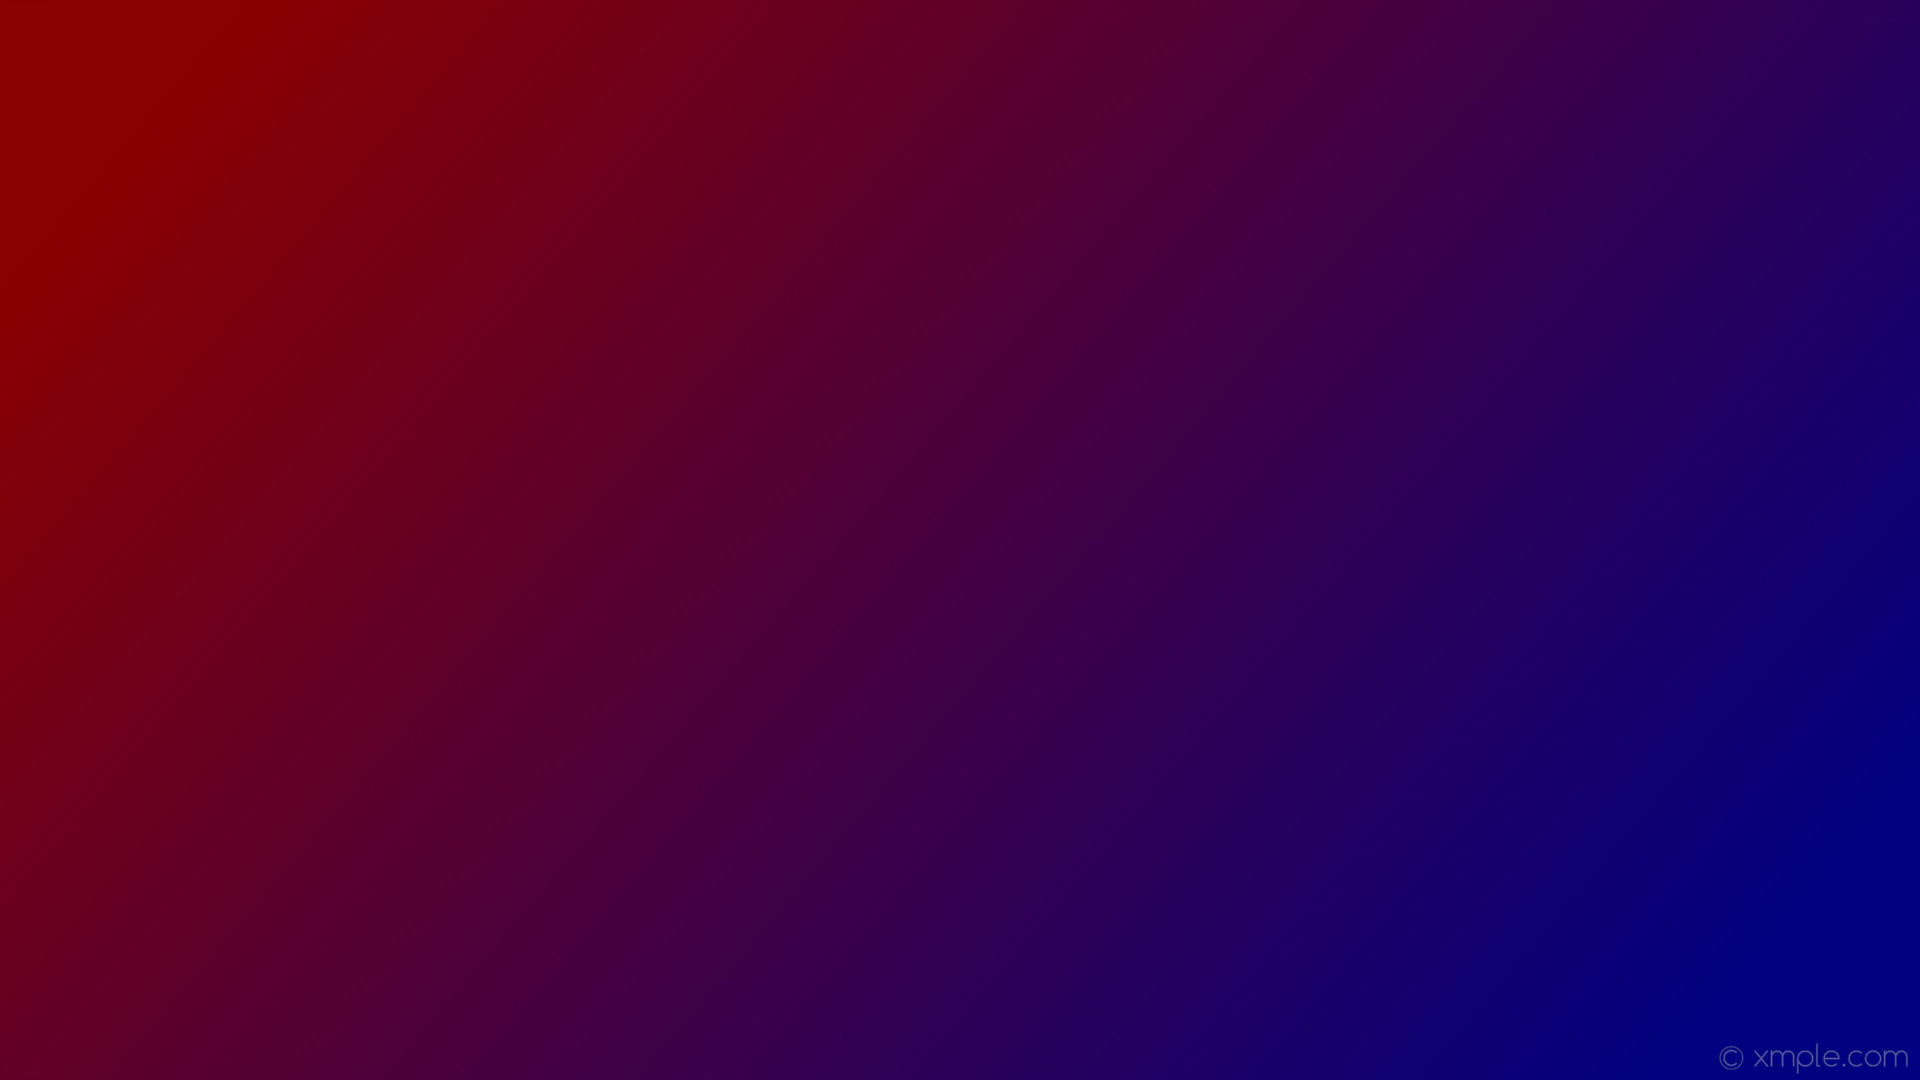 1920x1080 wallpaper gradient linear red blue dark red navy #8b0000 #000080 165Â°